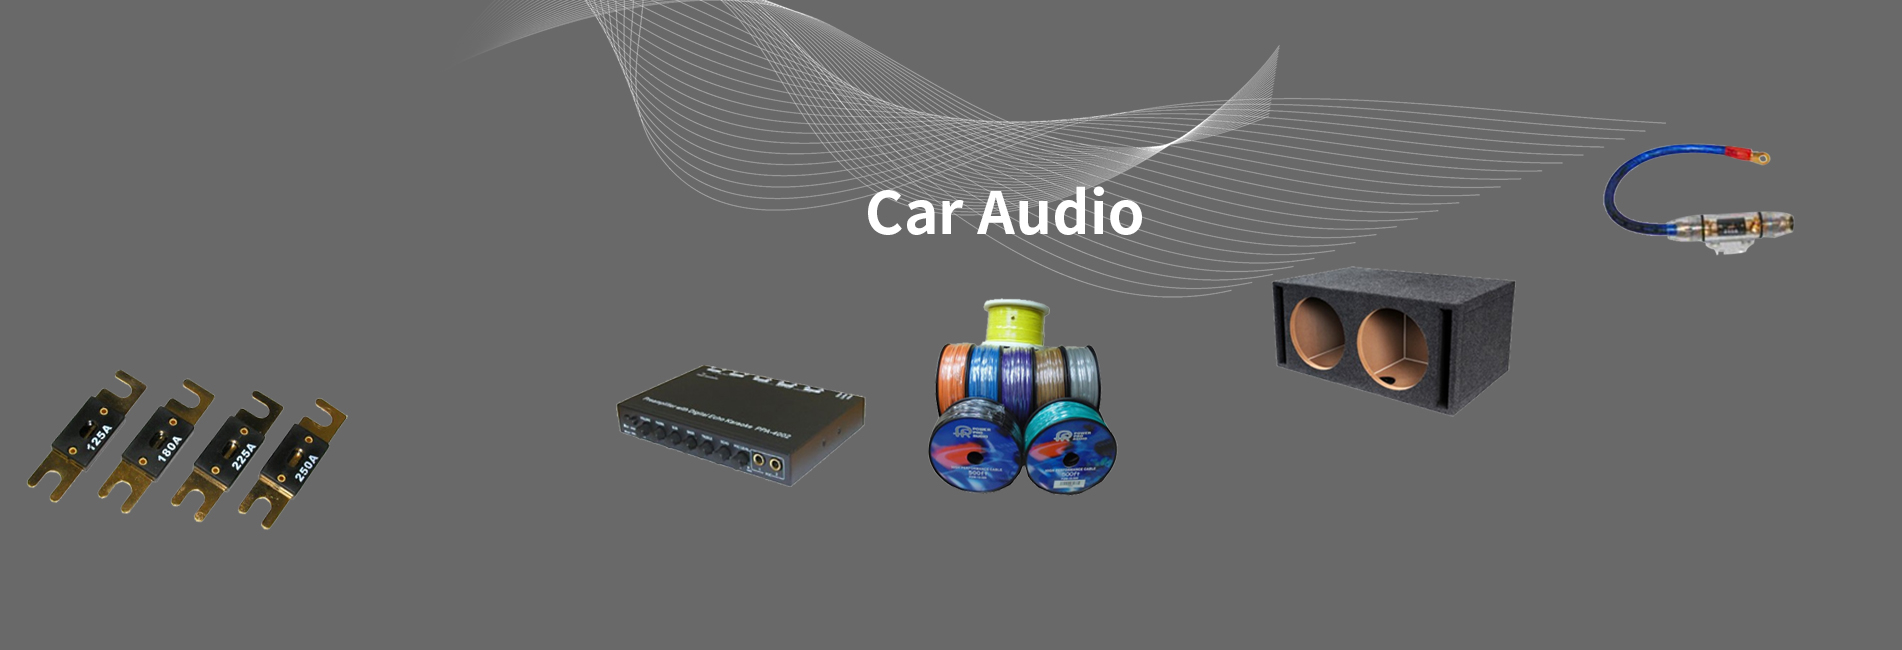 Car Audio banner1